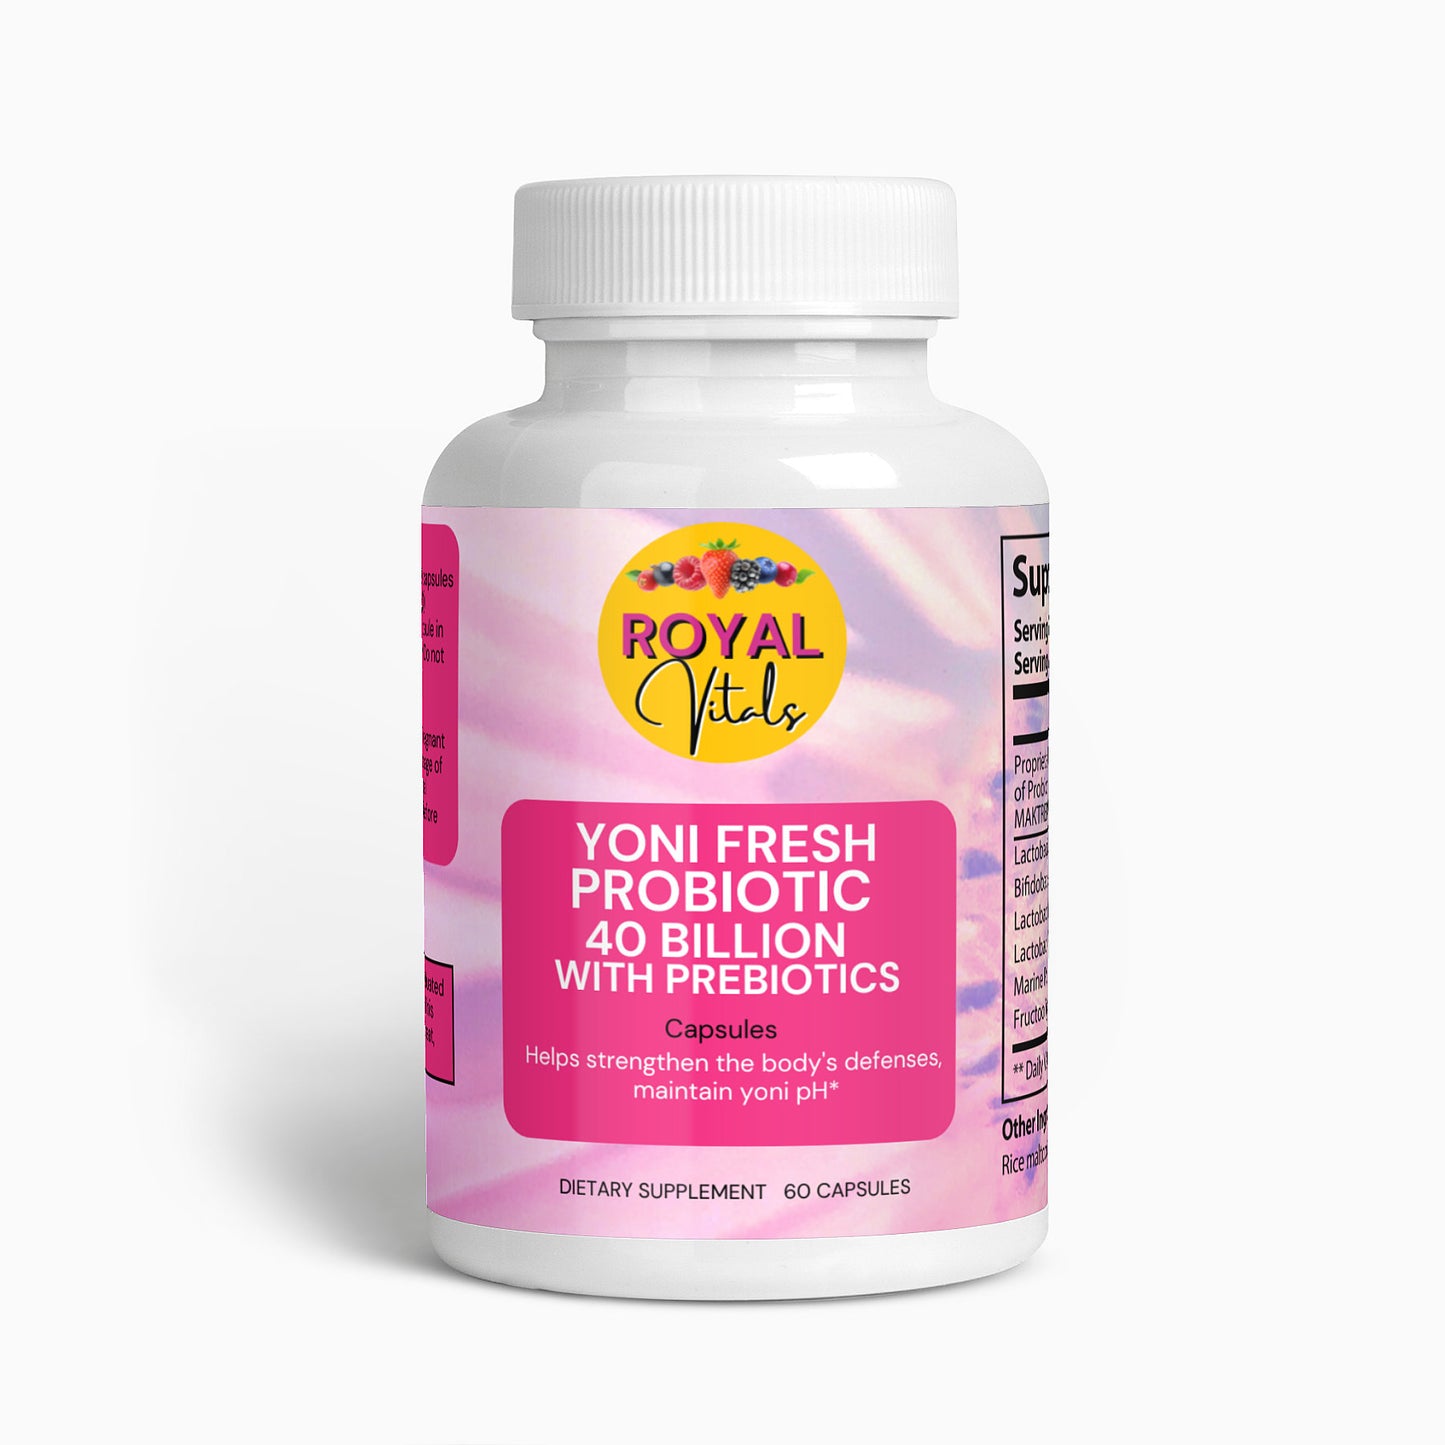 YONI REFRESH - Probiotic 40 Billion with Prebiotics